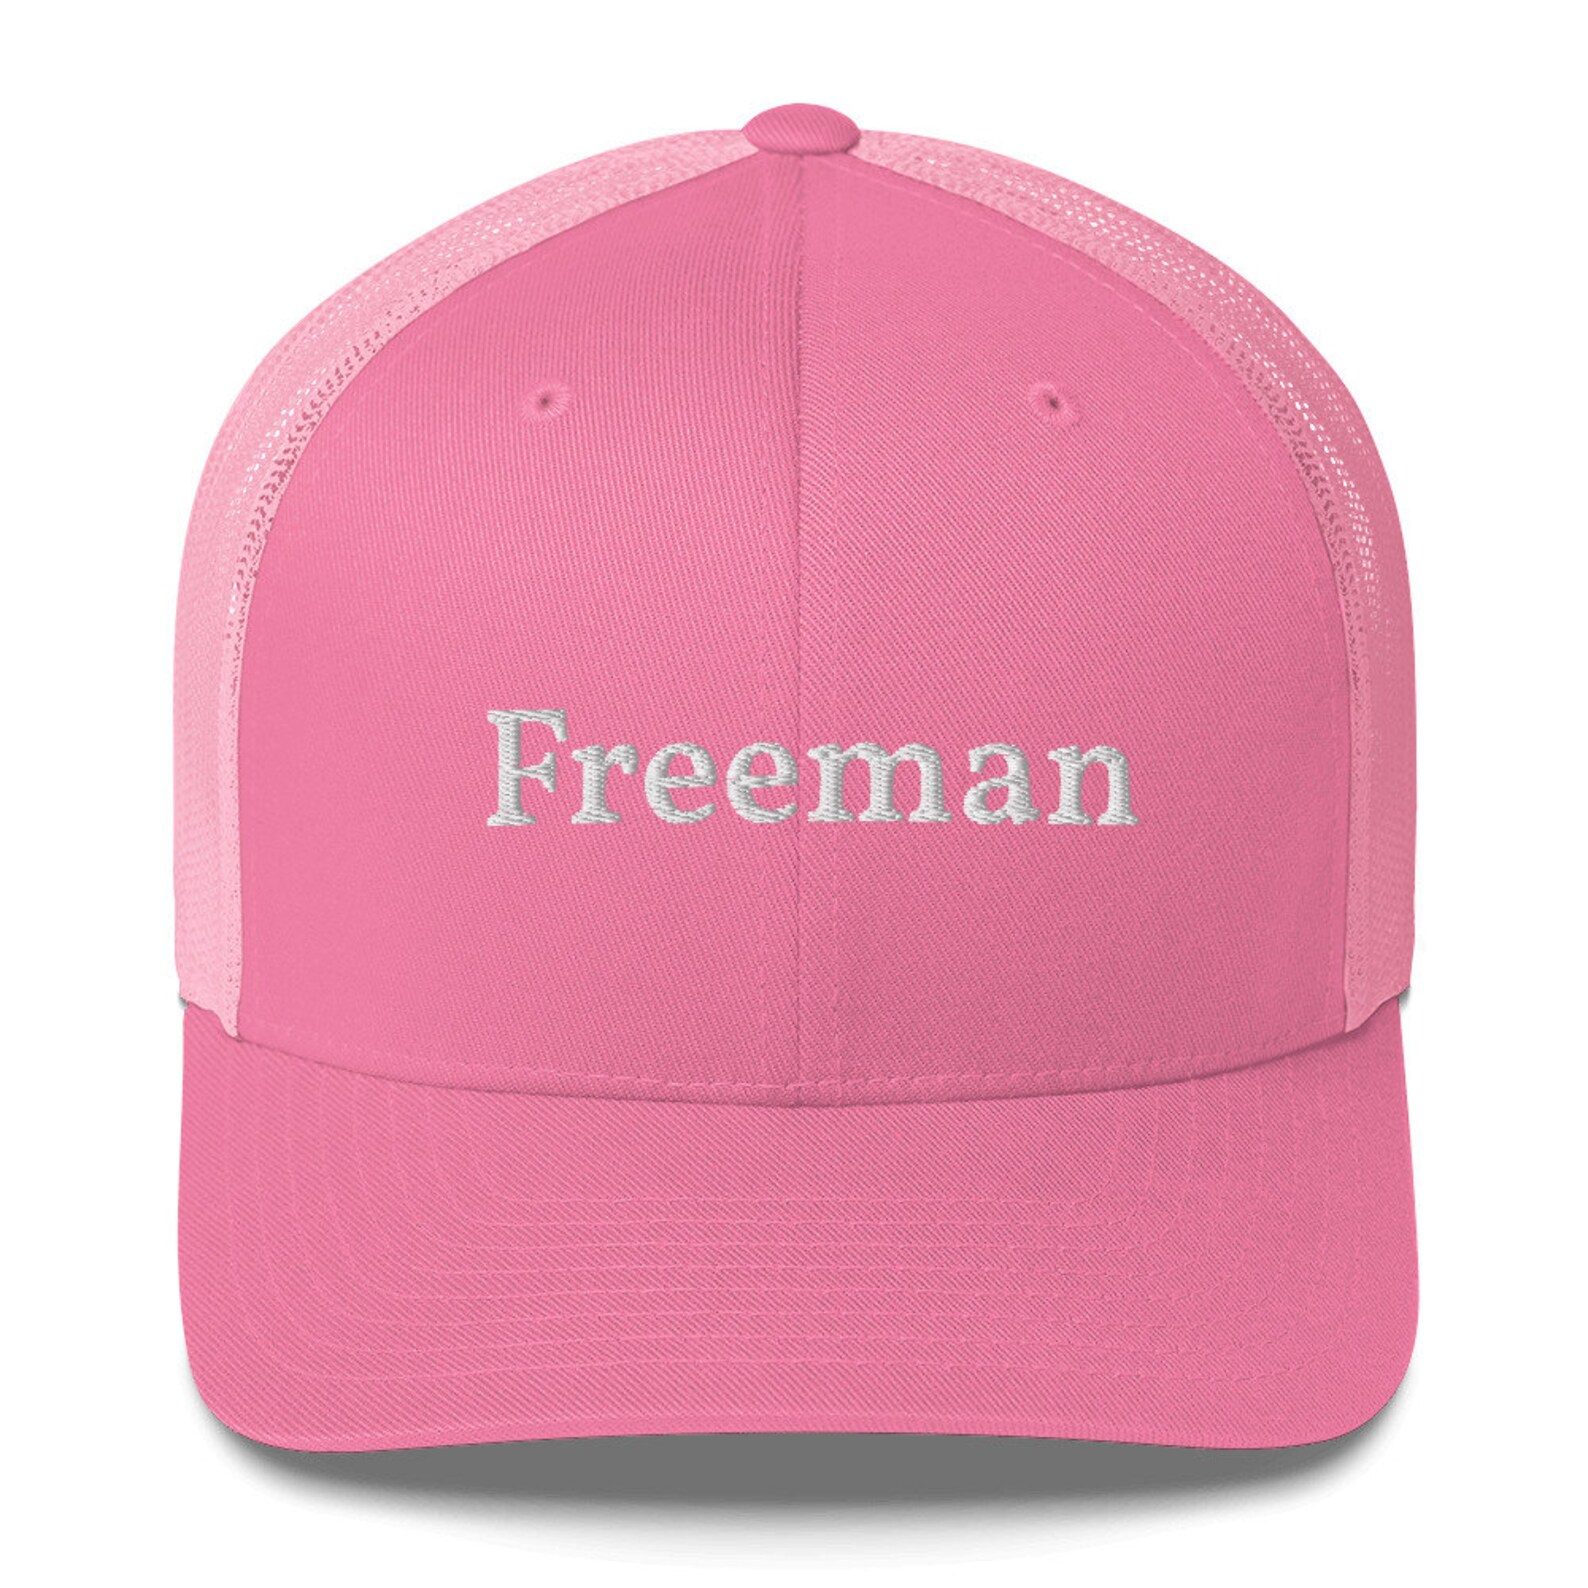 Freeman hat freemanTrucker Cap | Etsy